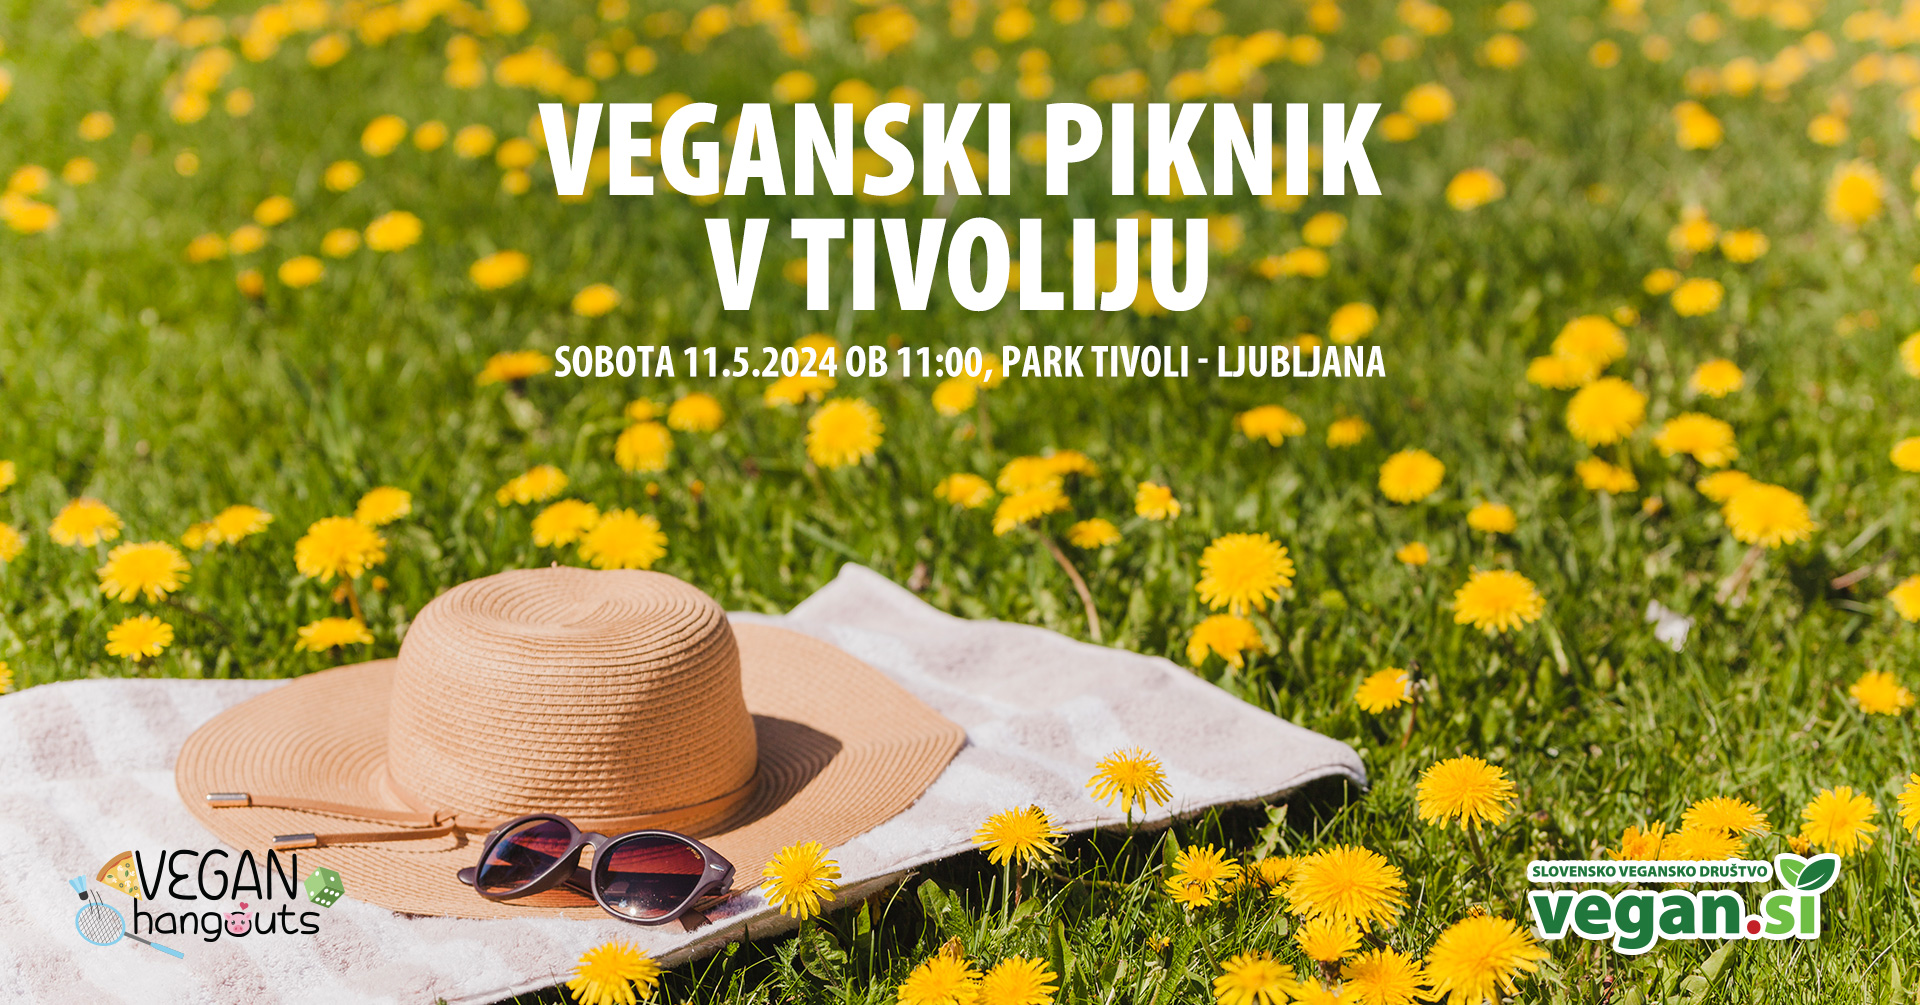 Vegan Hangouts: Veganski piknik v Tivoliju 7